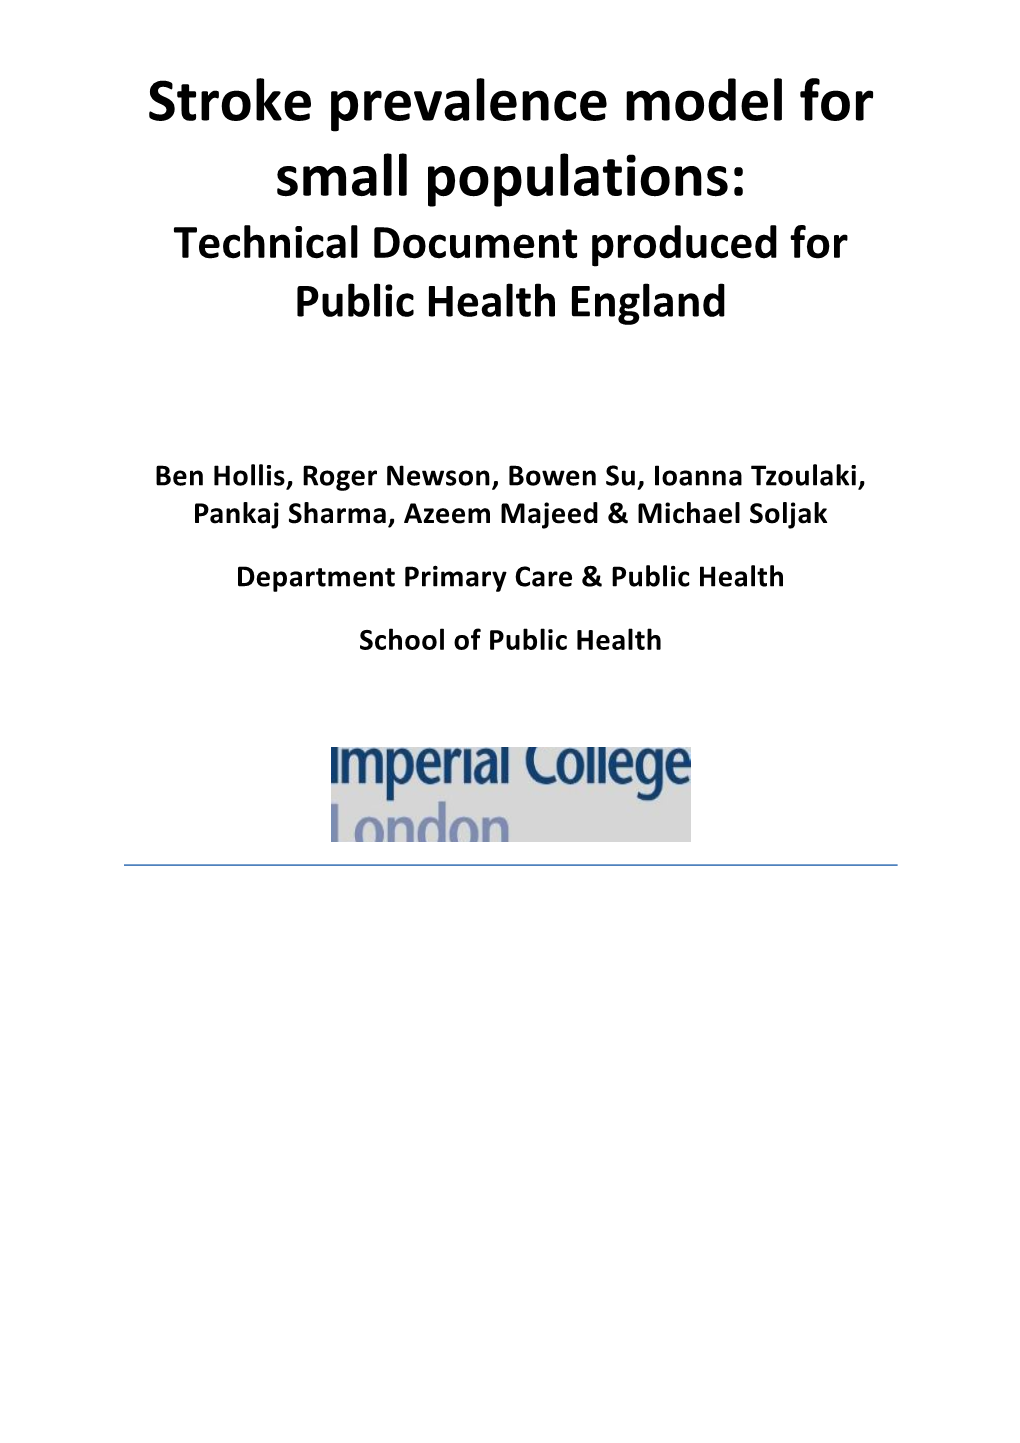 CPRD Back Pain Analysis Technical Document V4.1